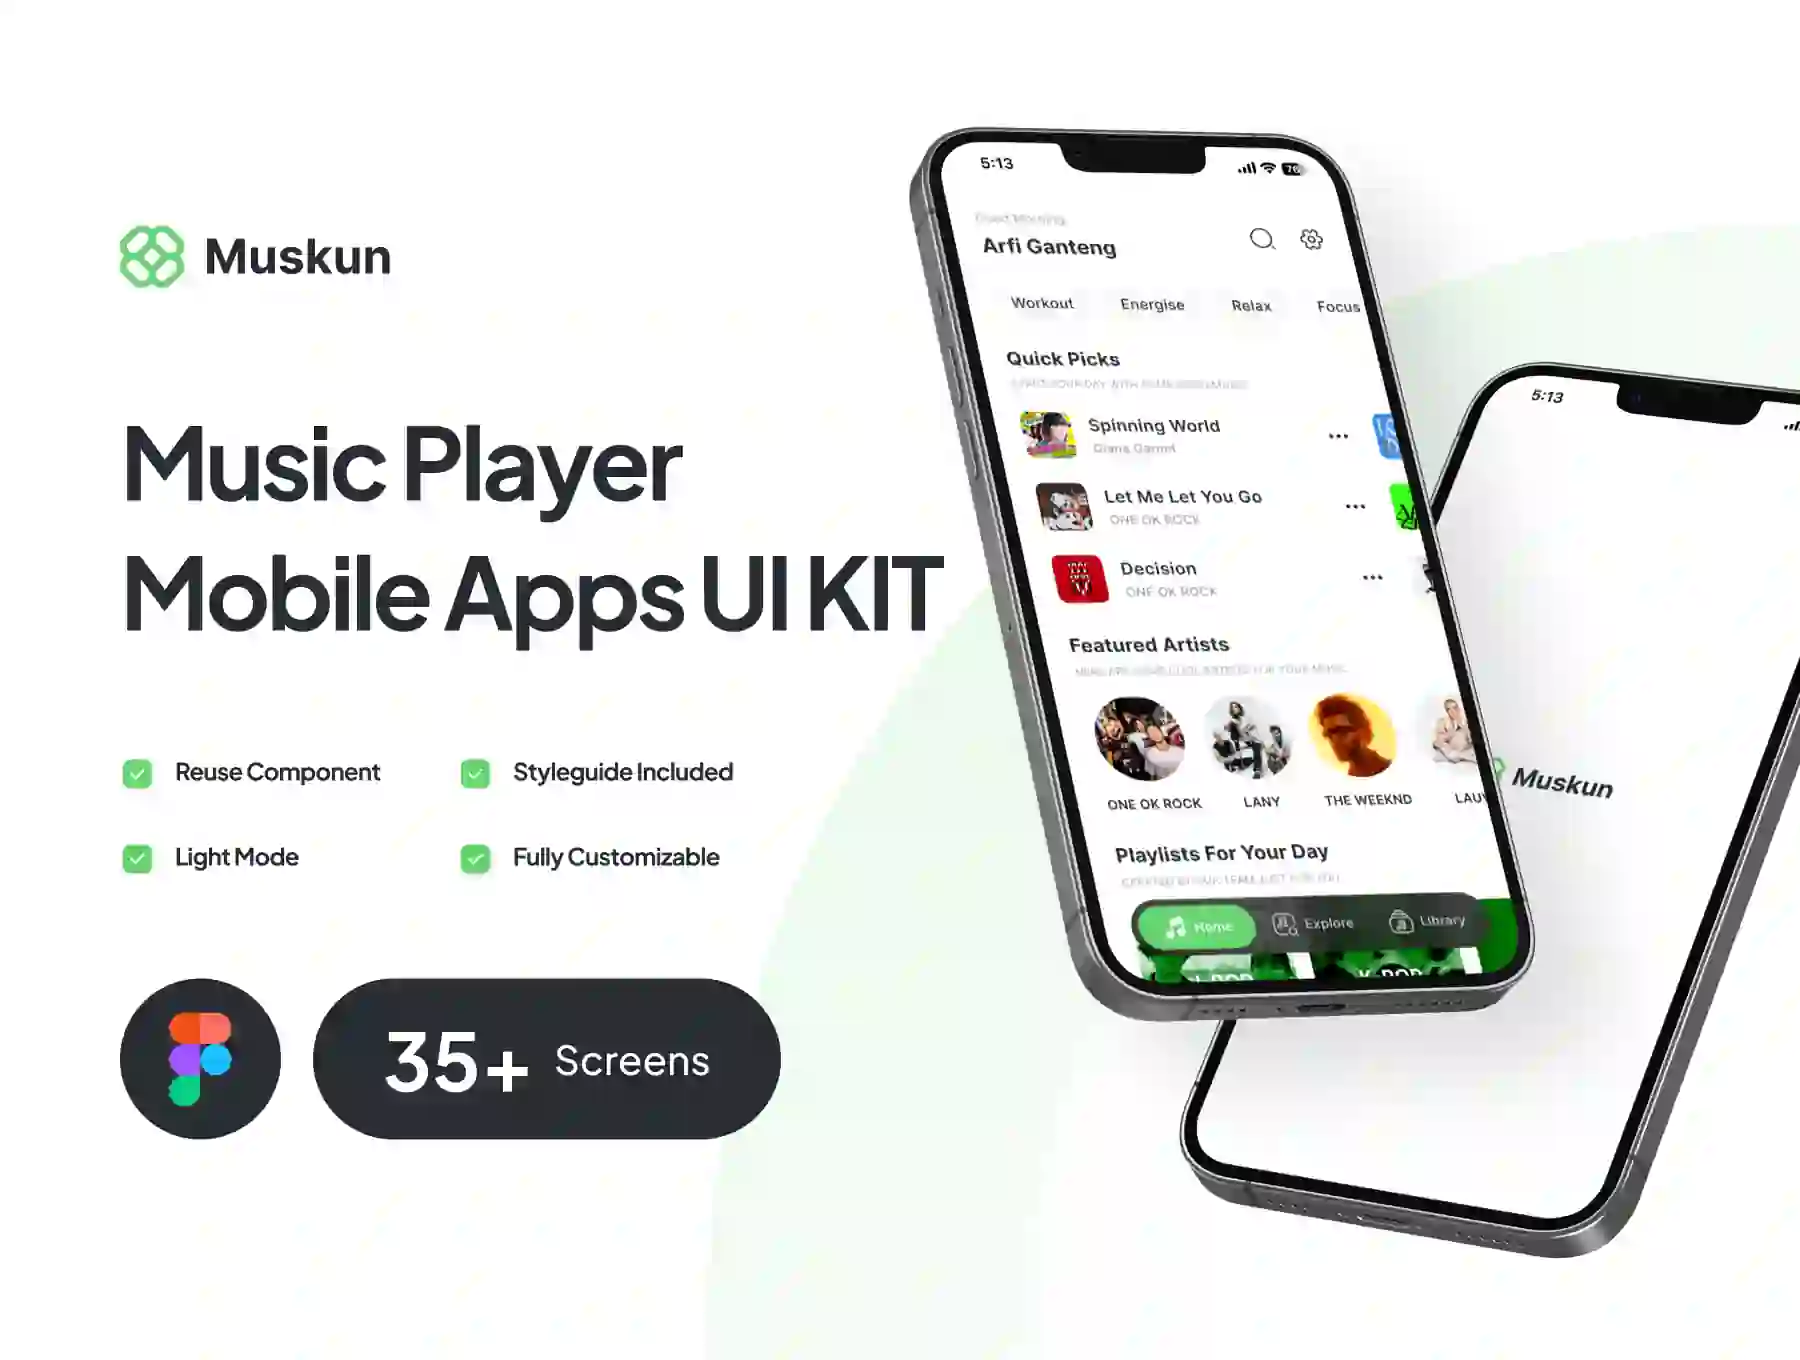 Muskun - Music Player Mobile App UI Kit